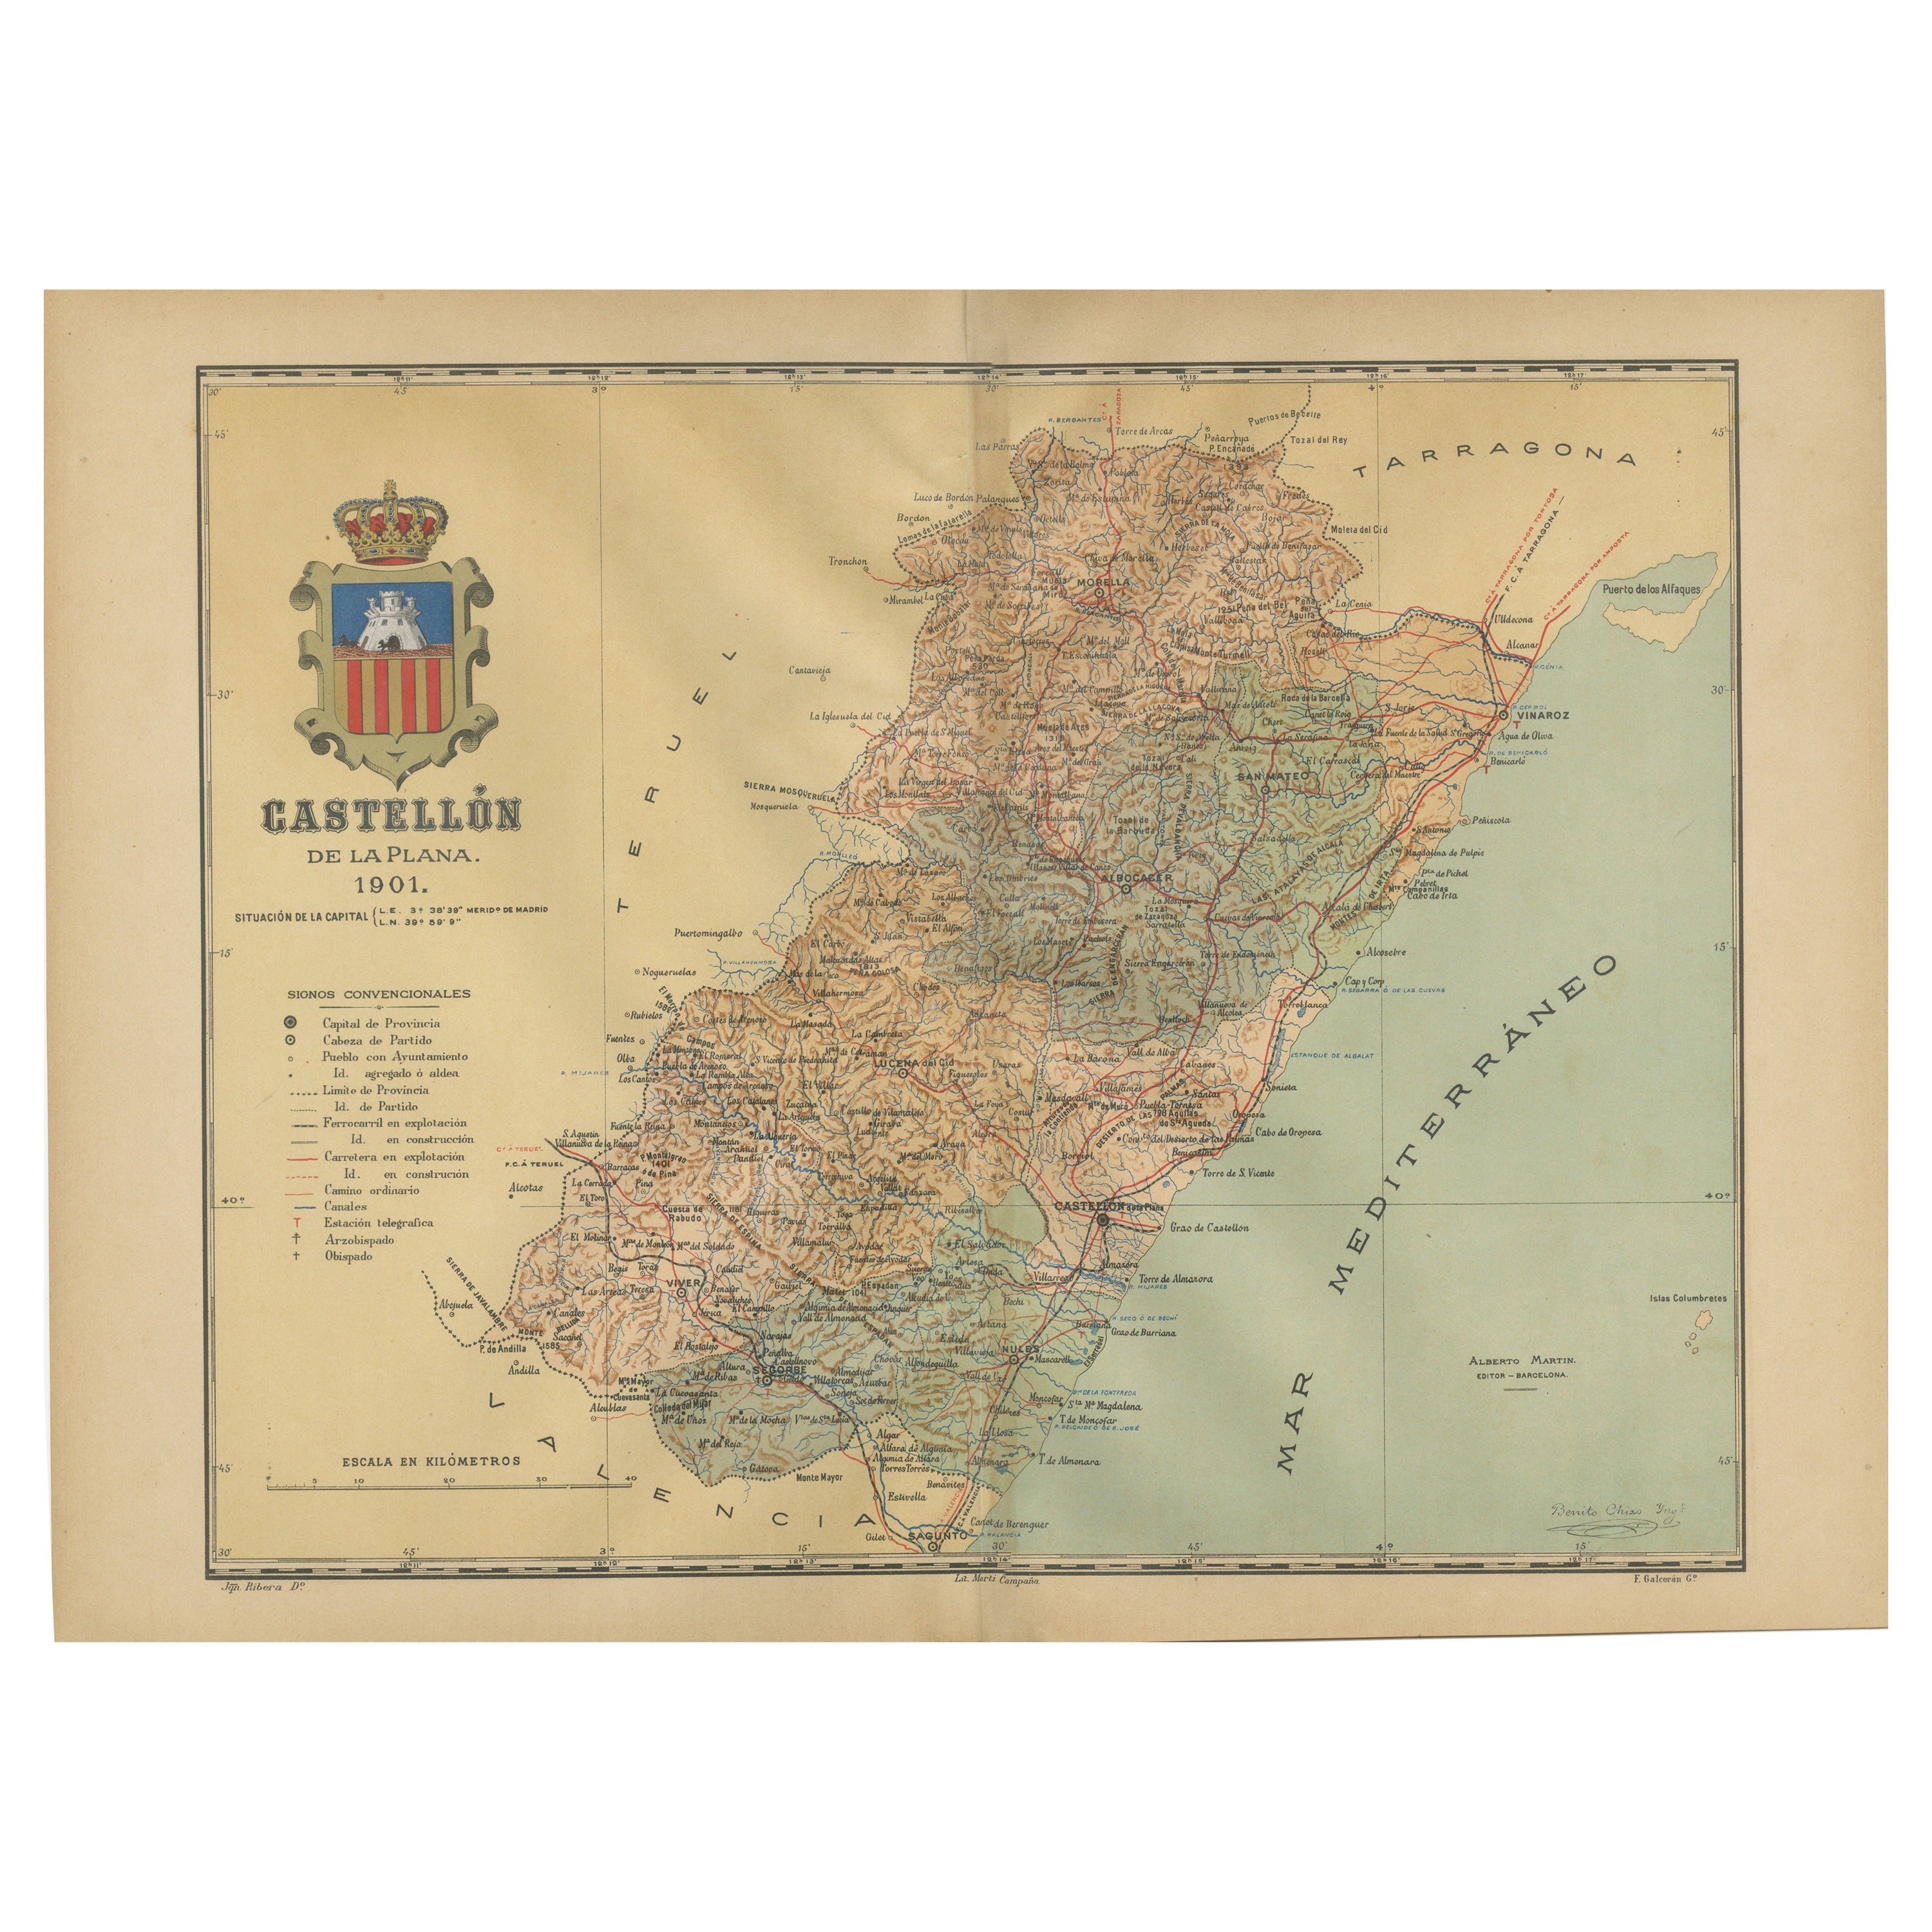 Castellón de la Plana 1901: A Cartographic Perspective of the Valencian Coast